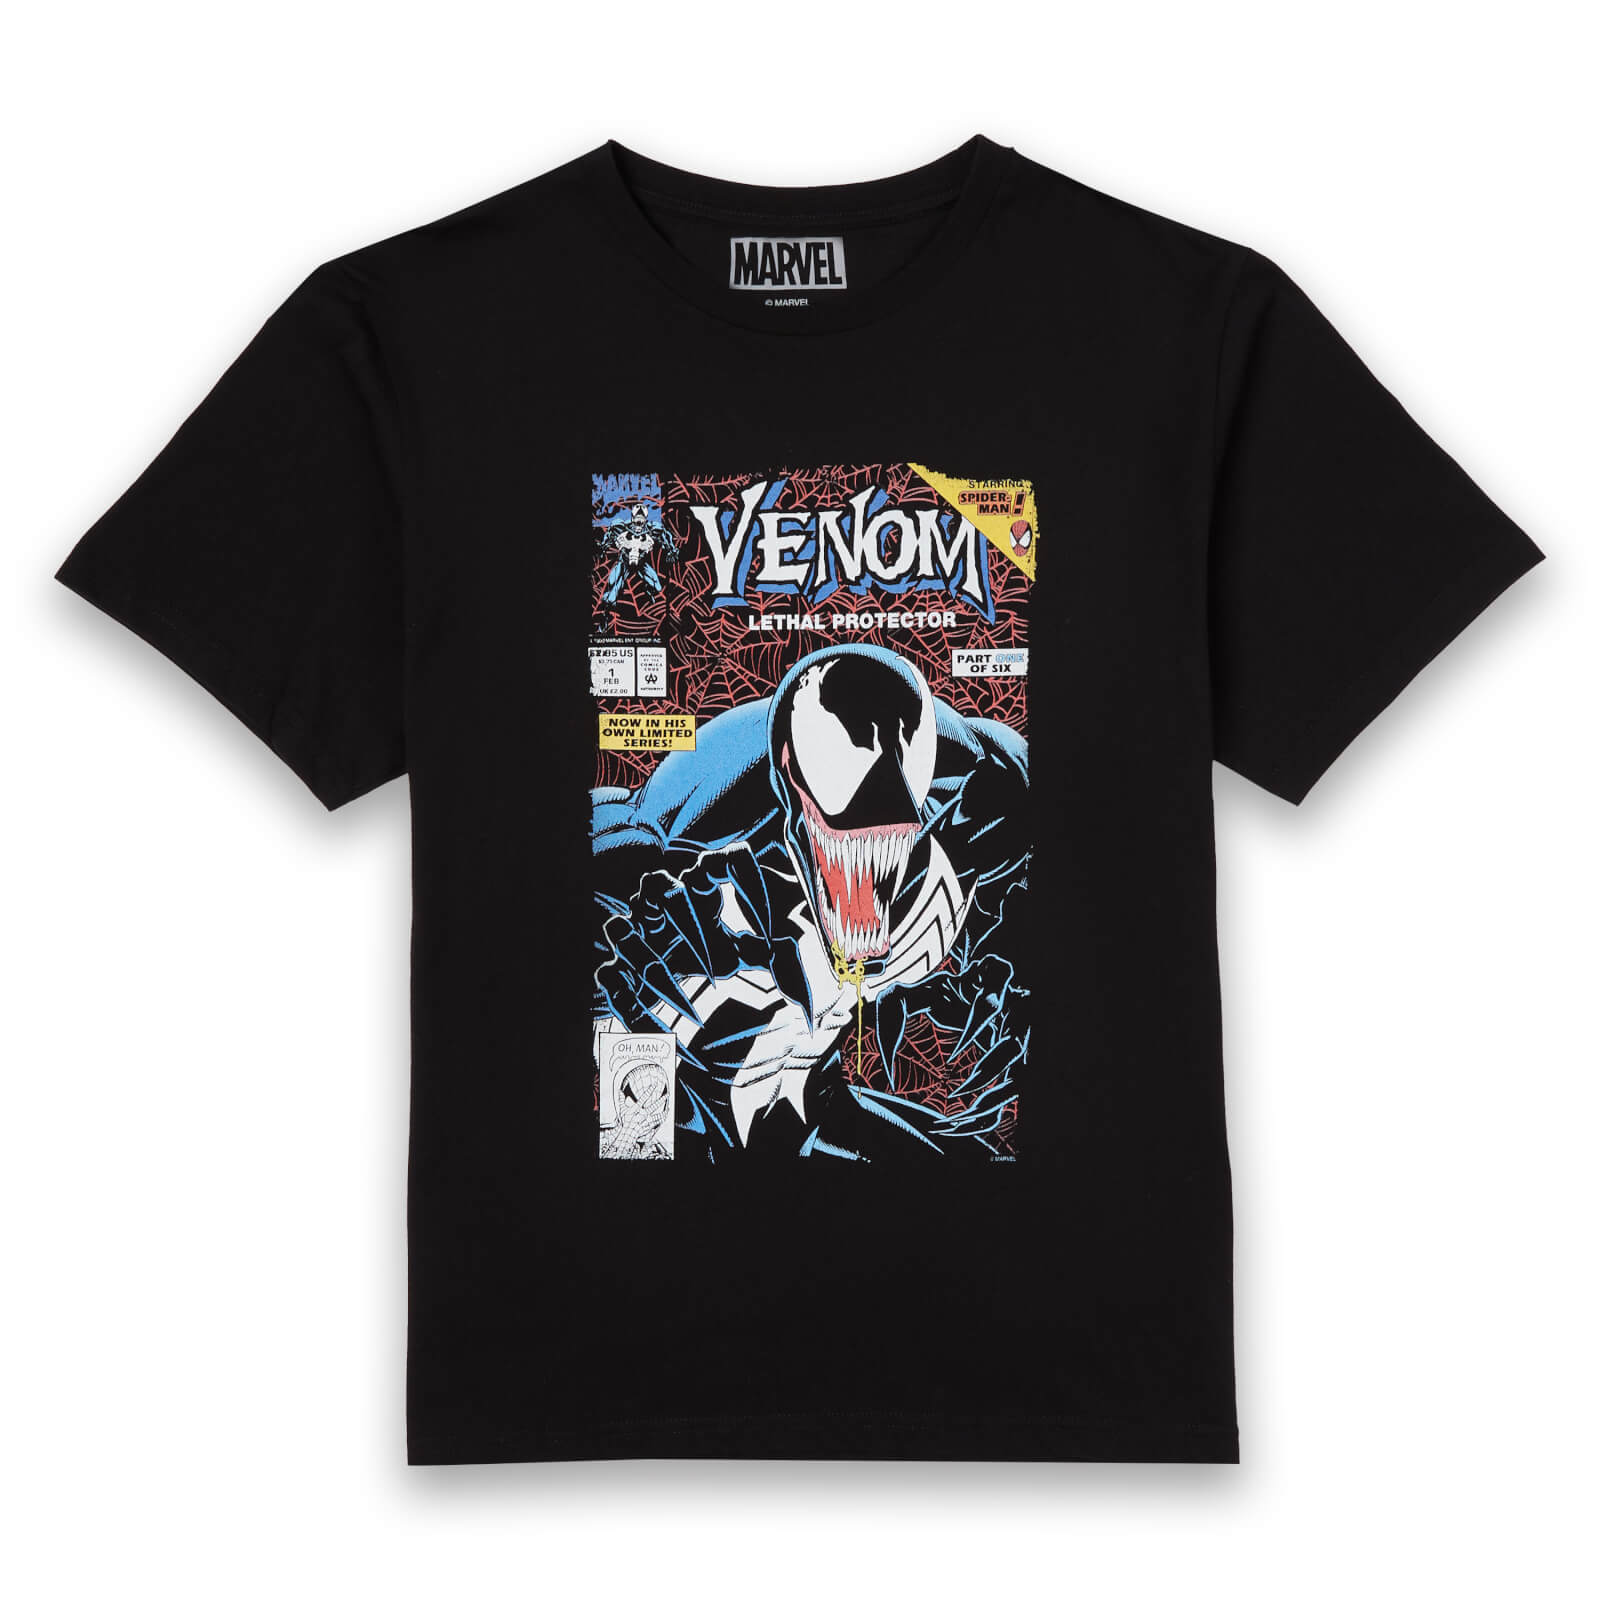 Venom Lethal Protector Men's T-Shirt - Black - XS